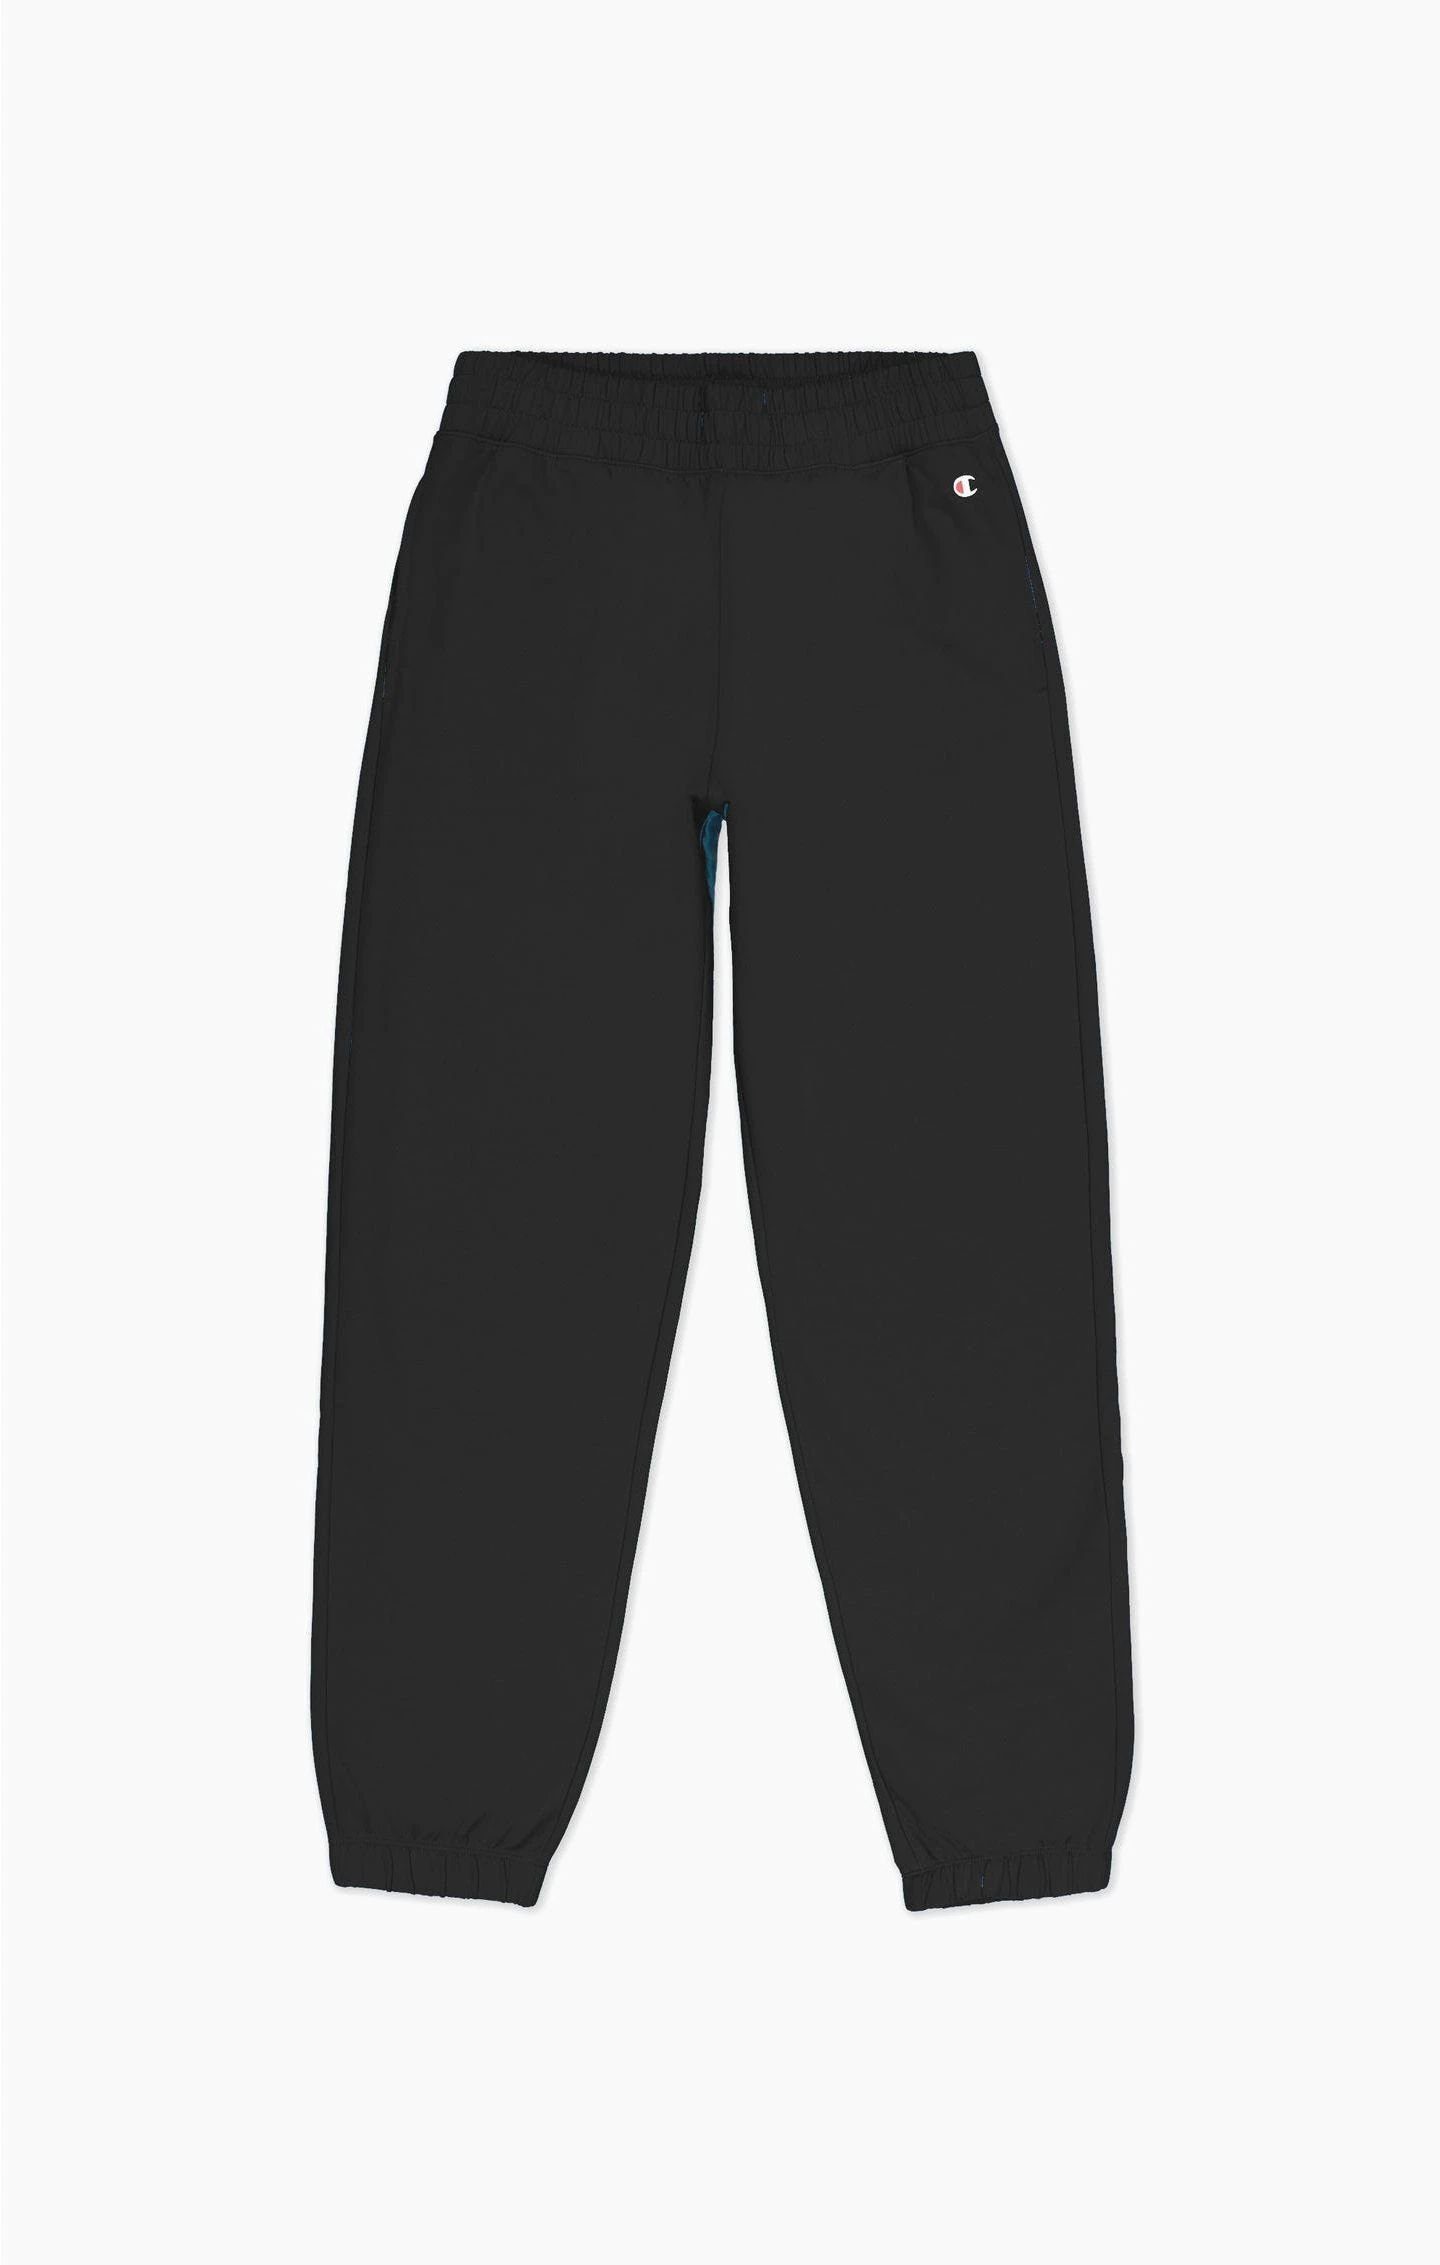 Champion Sweathose Hose Jogginghose aus Stretch-Baumwolle mit schwarz | Jogginghosen